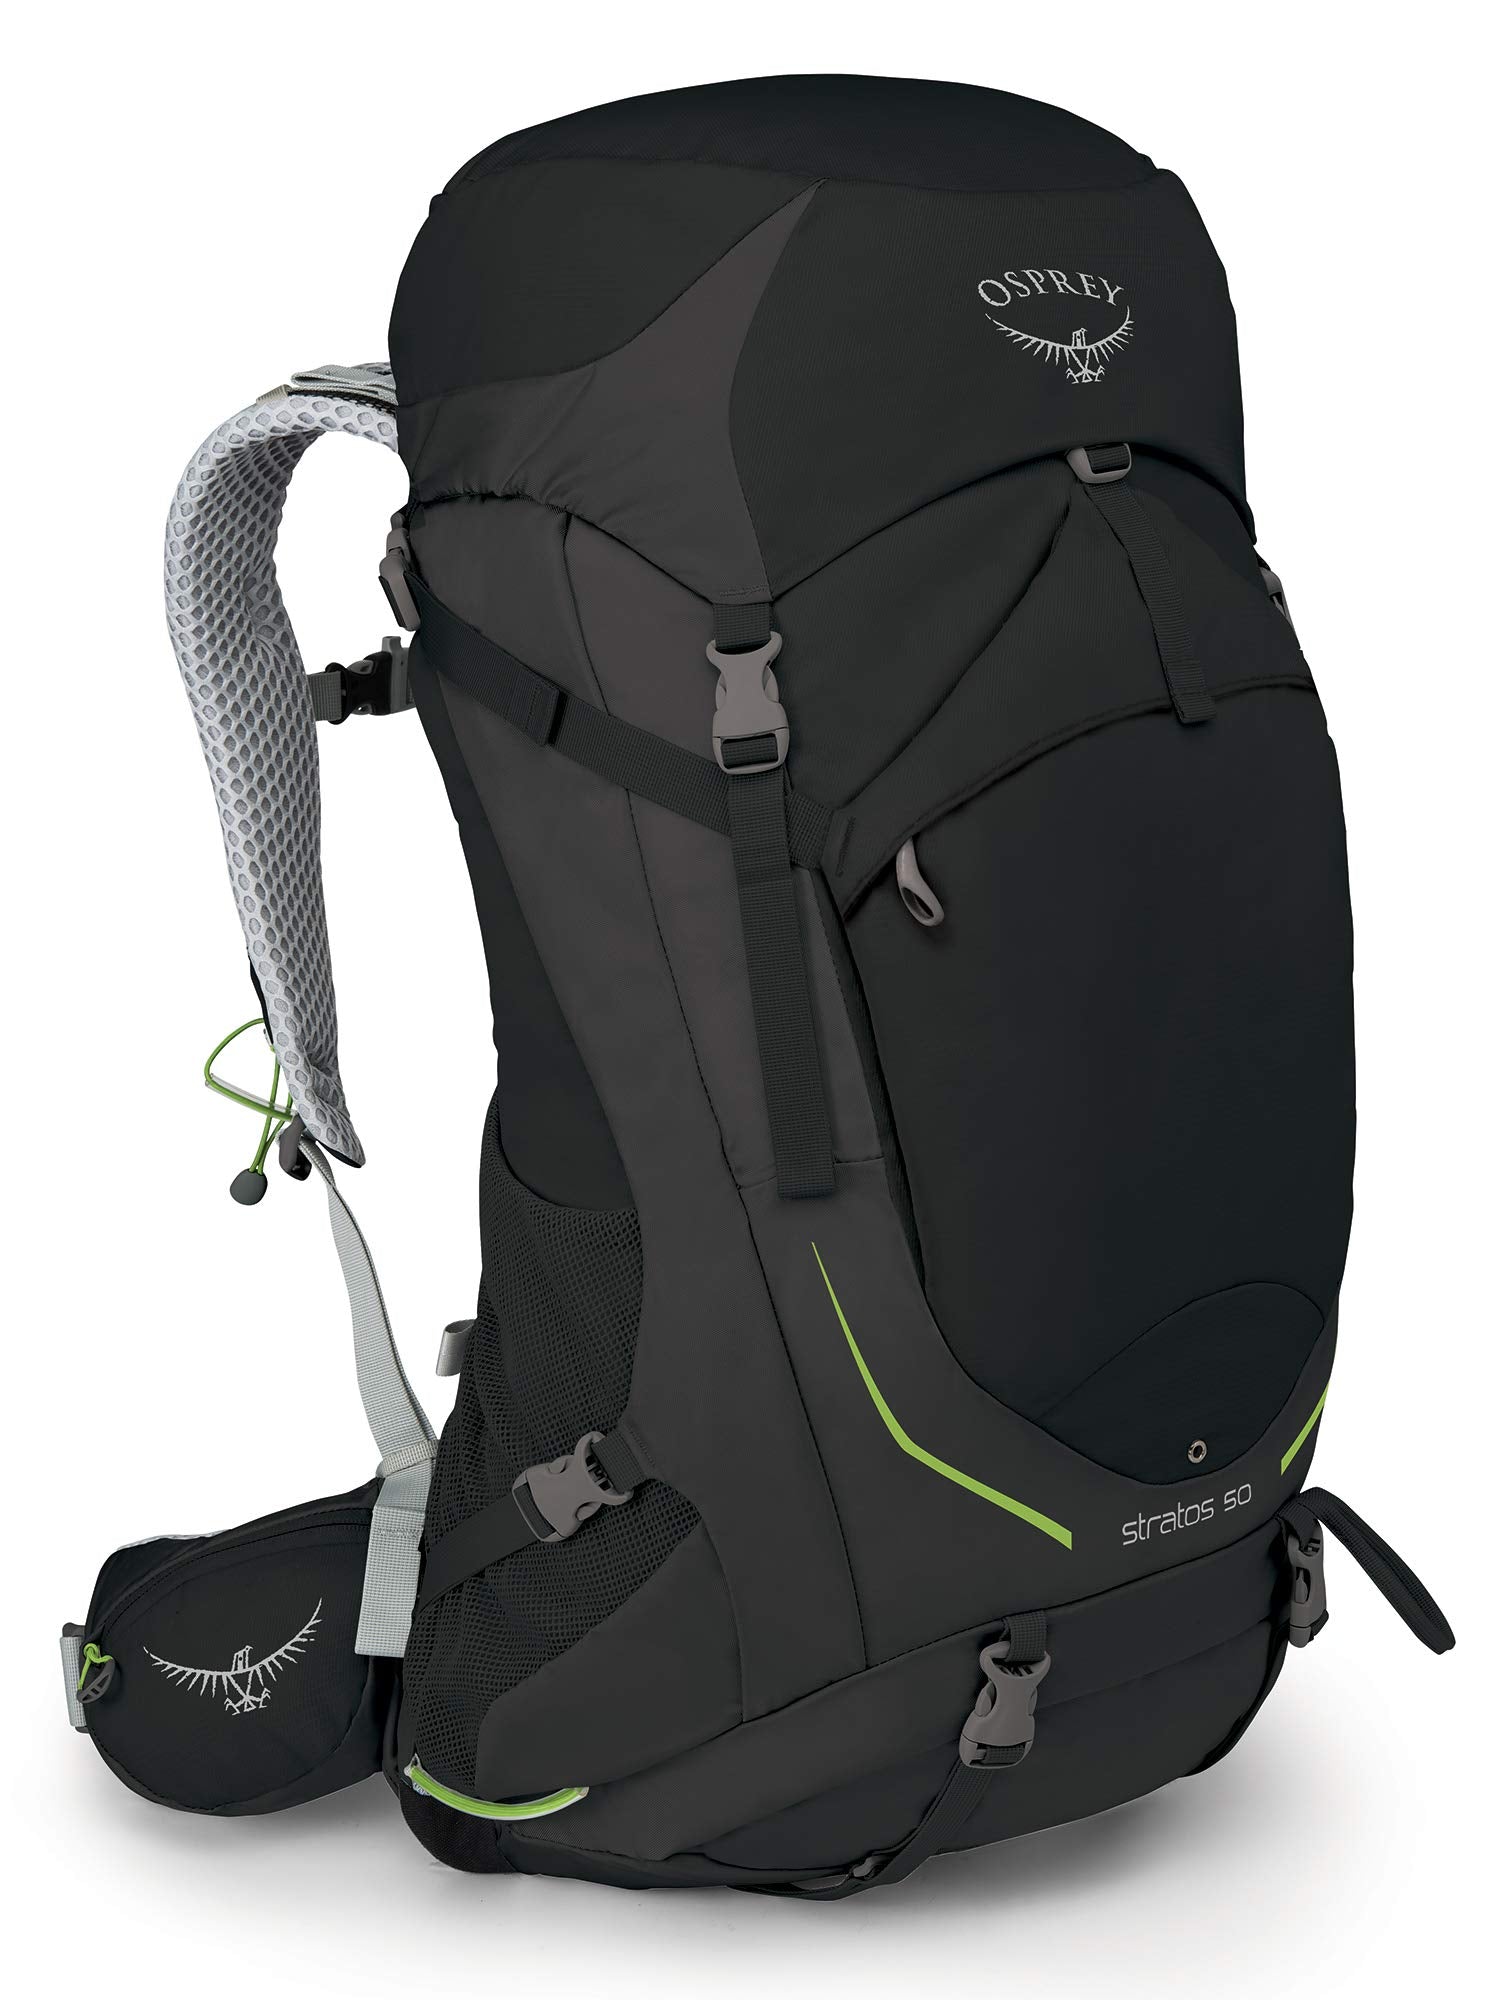 Osprey Stratos 50 Men's Backpacking Backpack  - Very Good